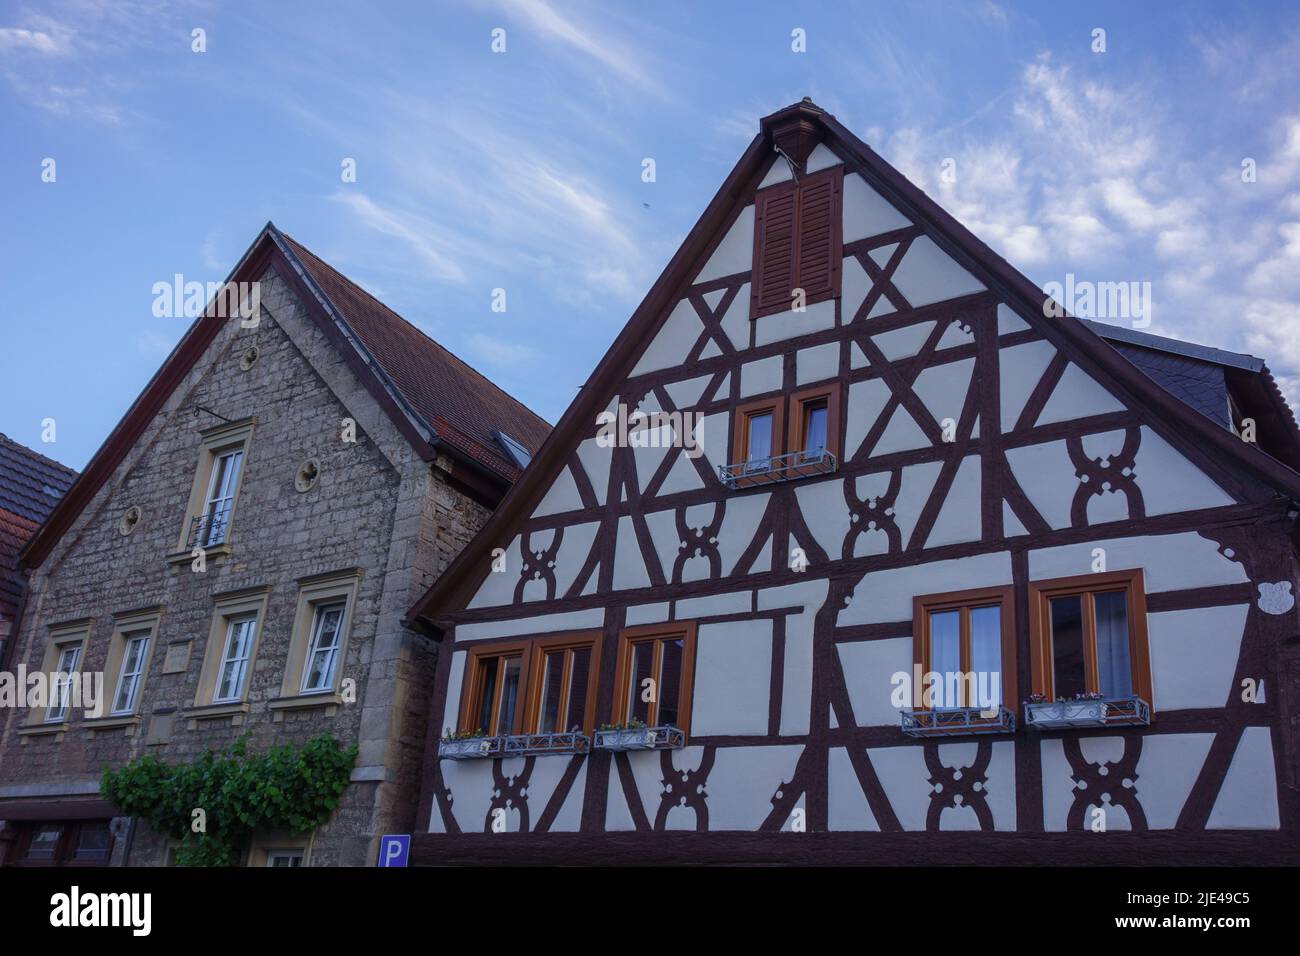 Eibelstadt village in bavaria Stock Photo